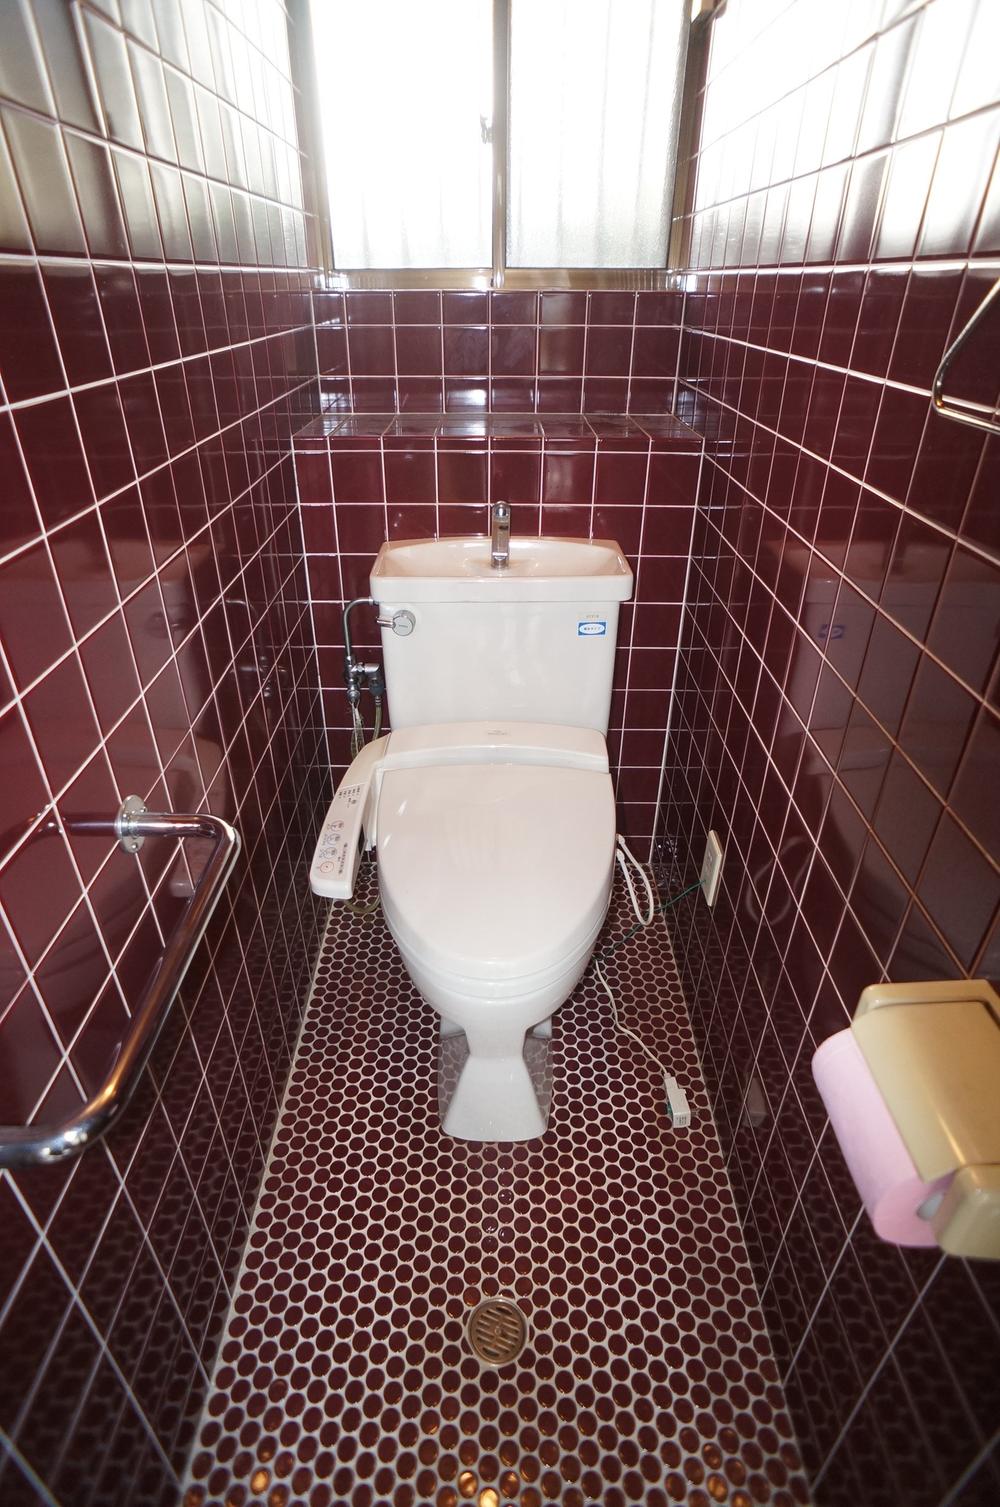 Toilet. 1st floor: toilet